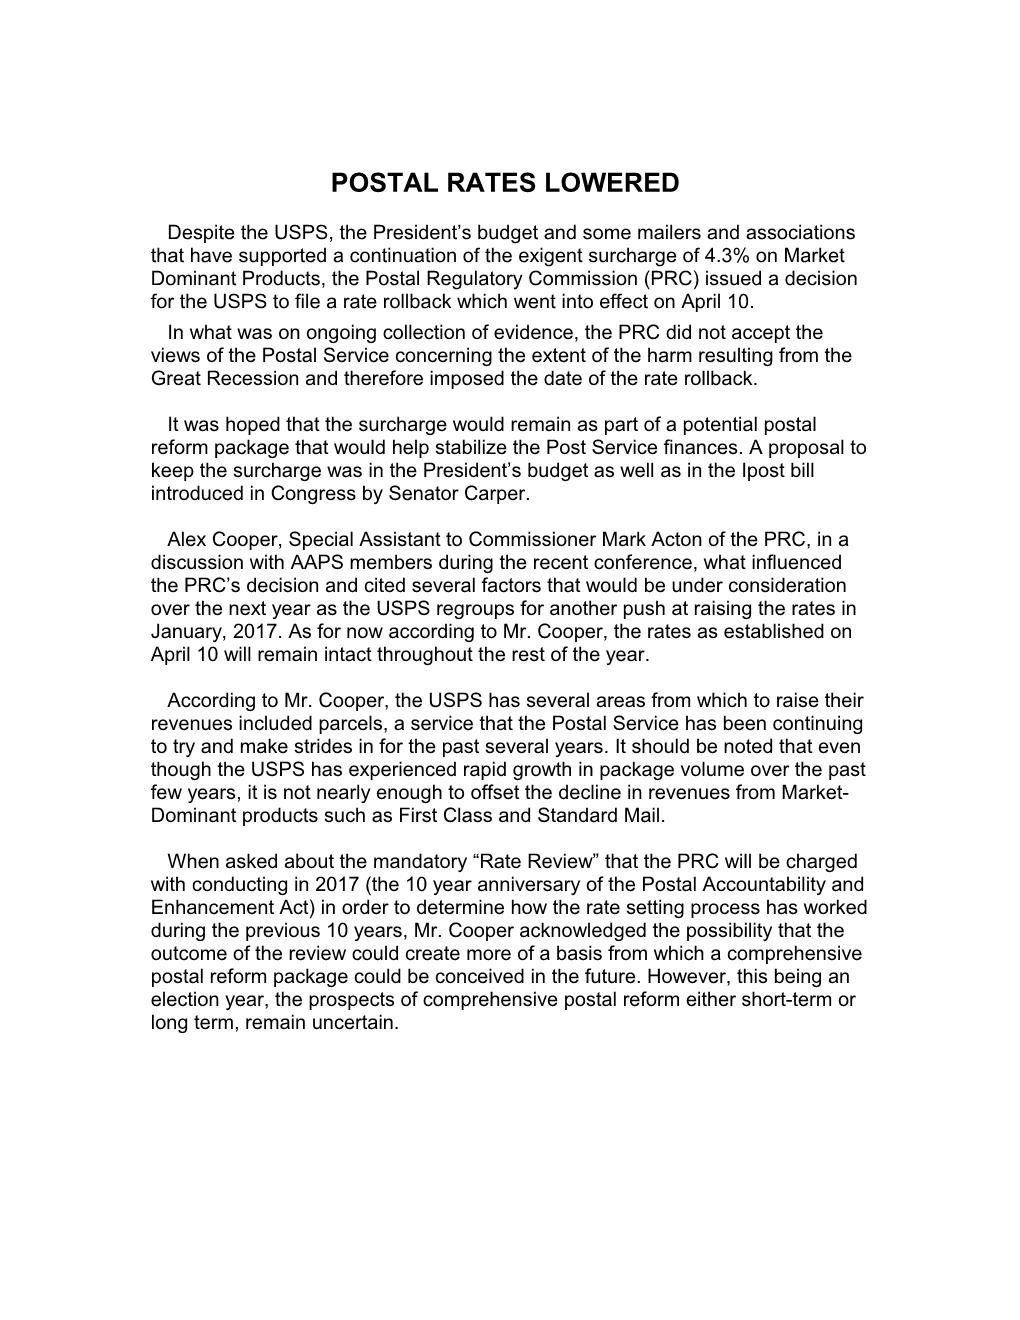 Postal Rates Lowered